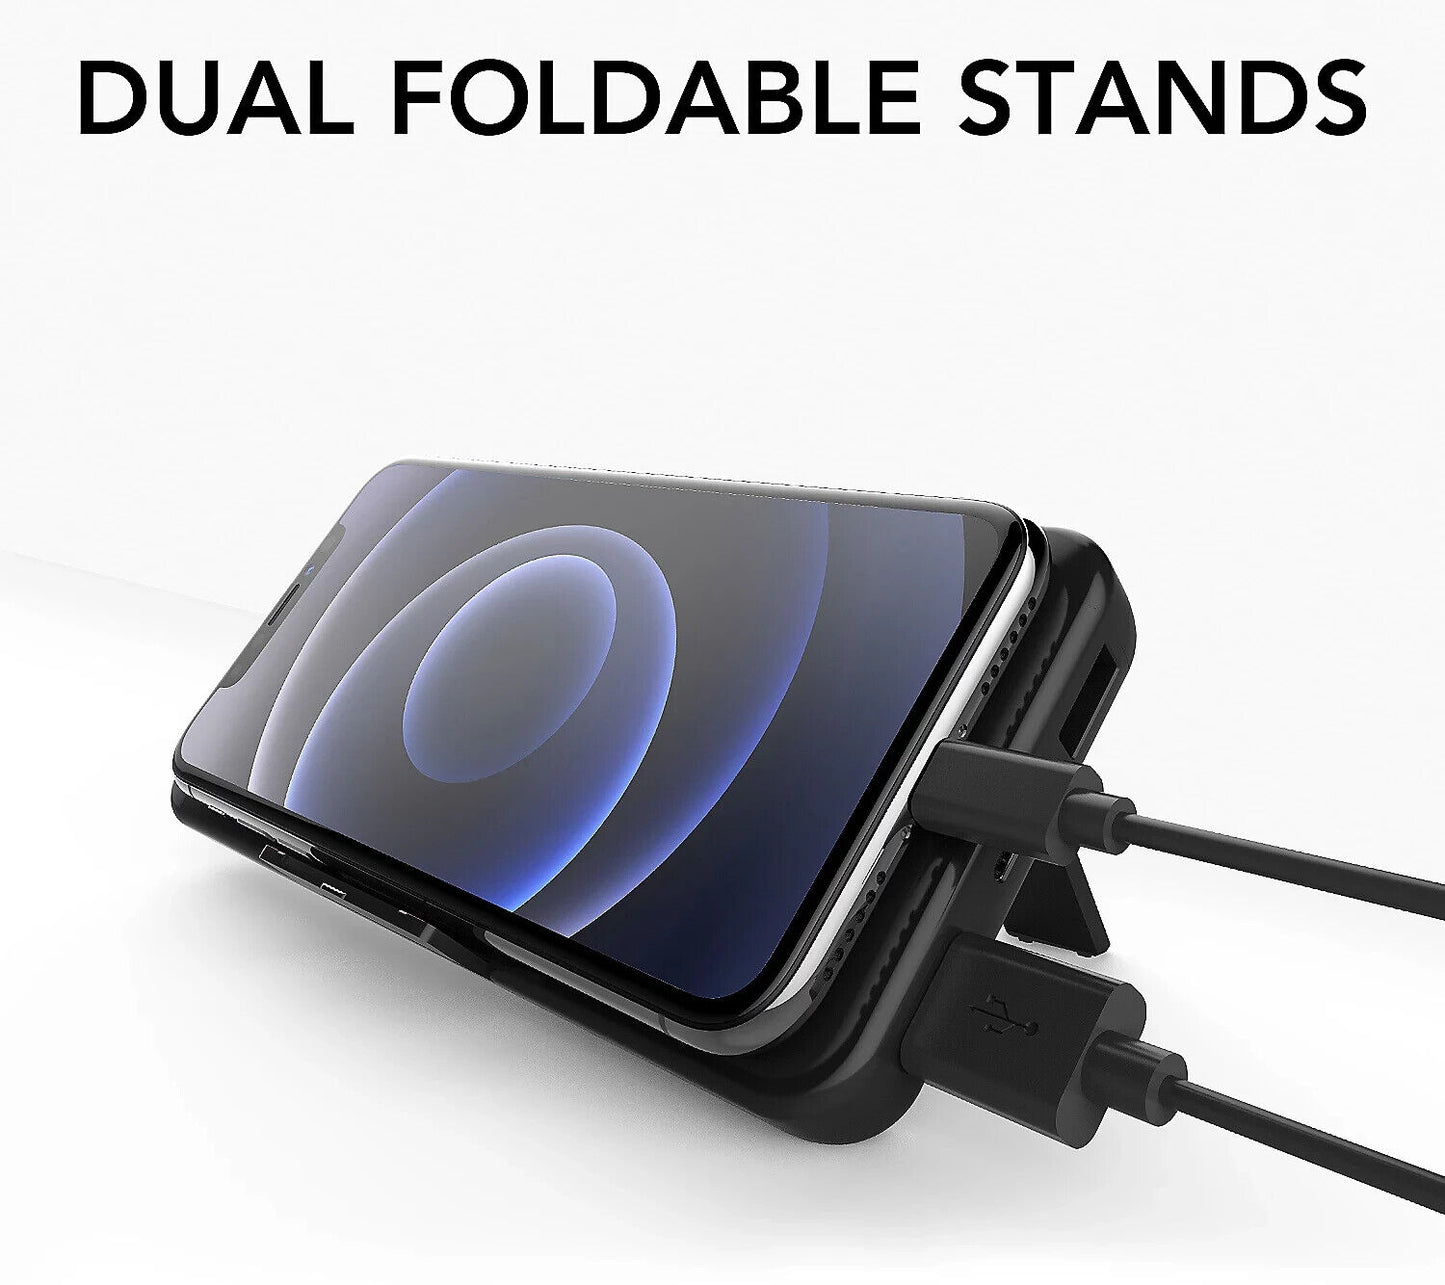 Pongo Portable Battery Powerbank Backup for Mobile Phone - BLACK